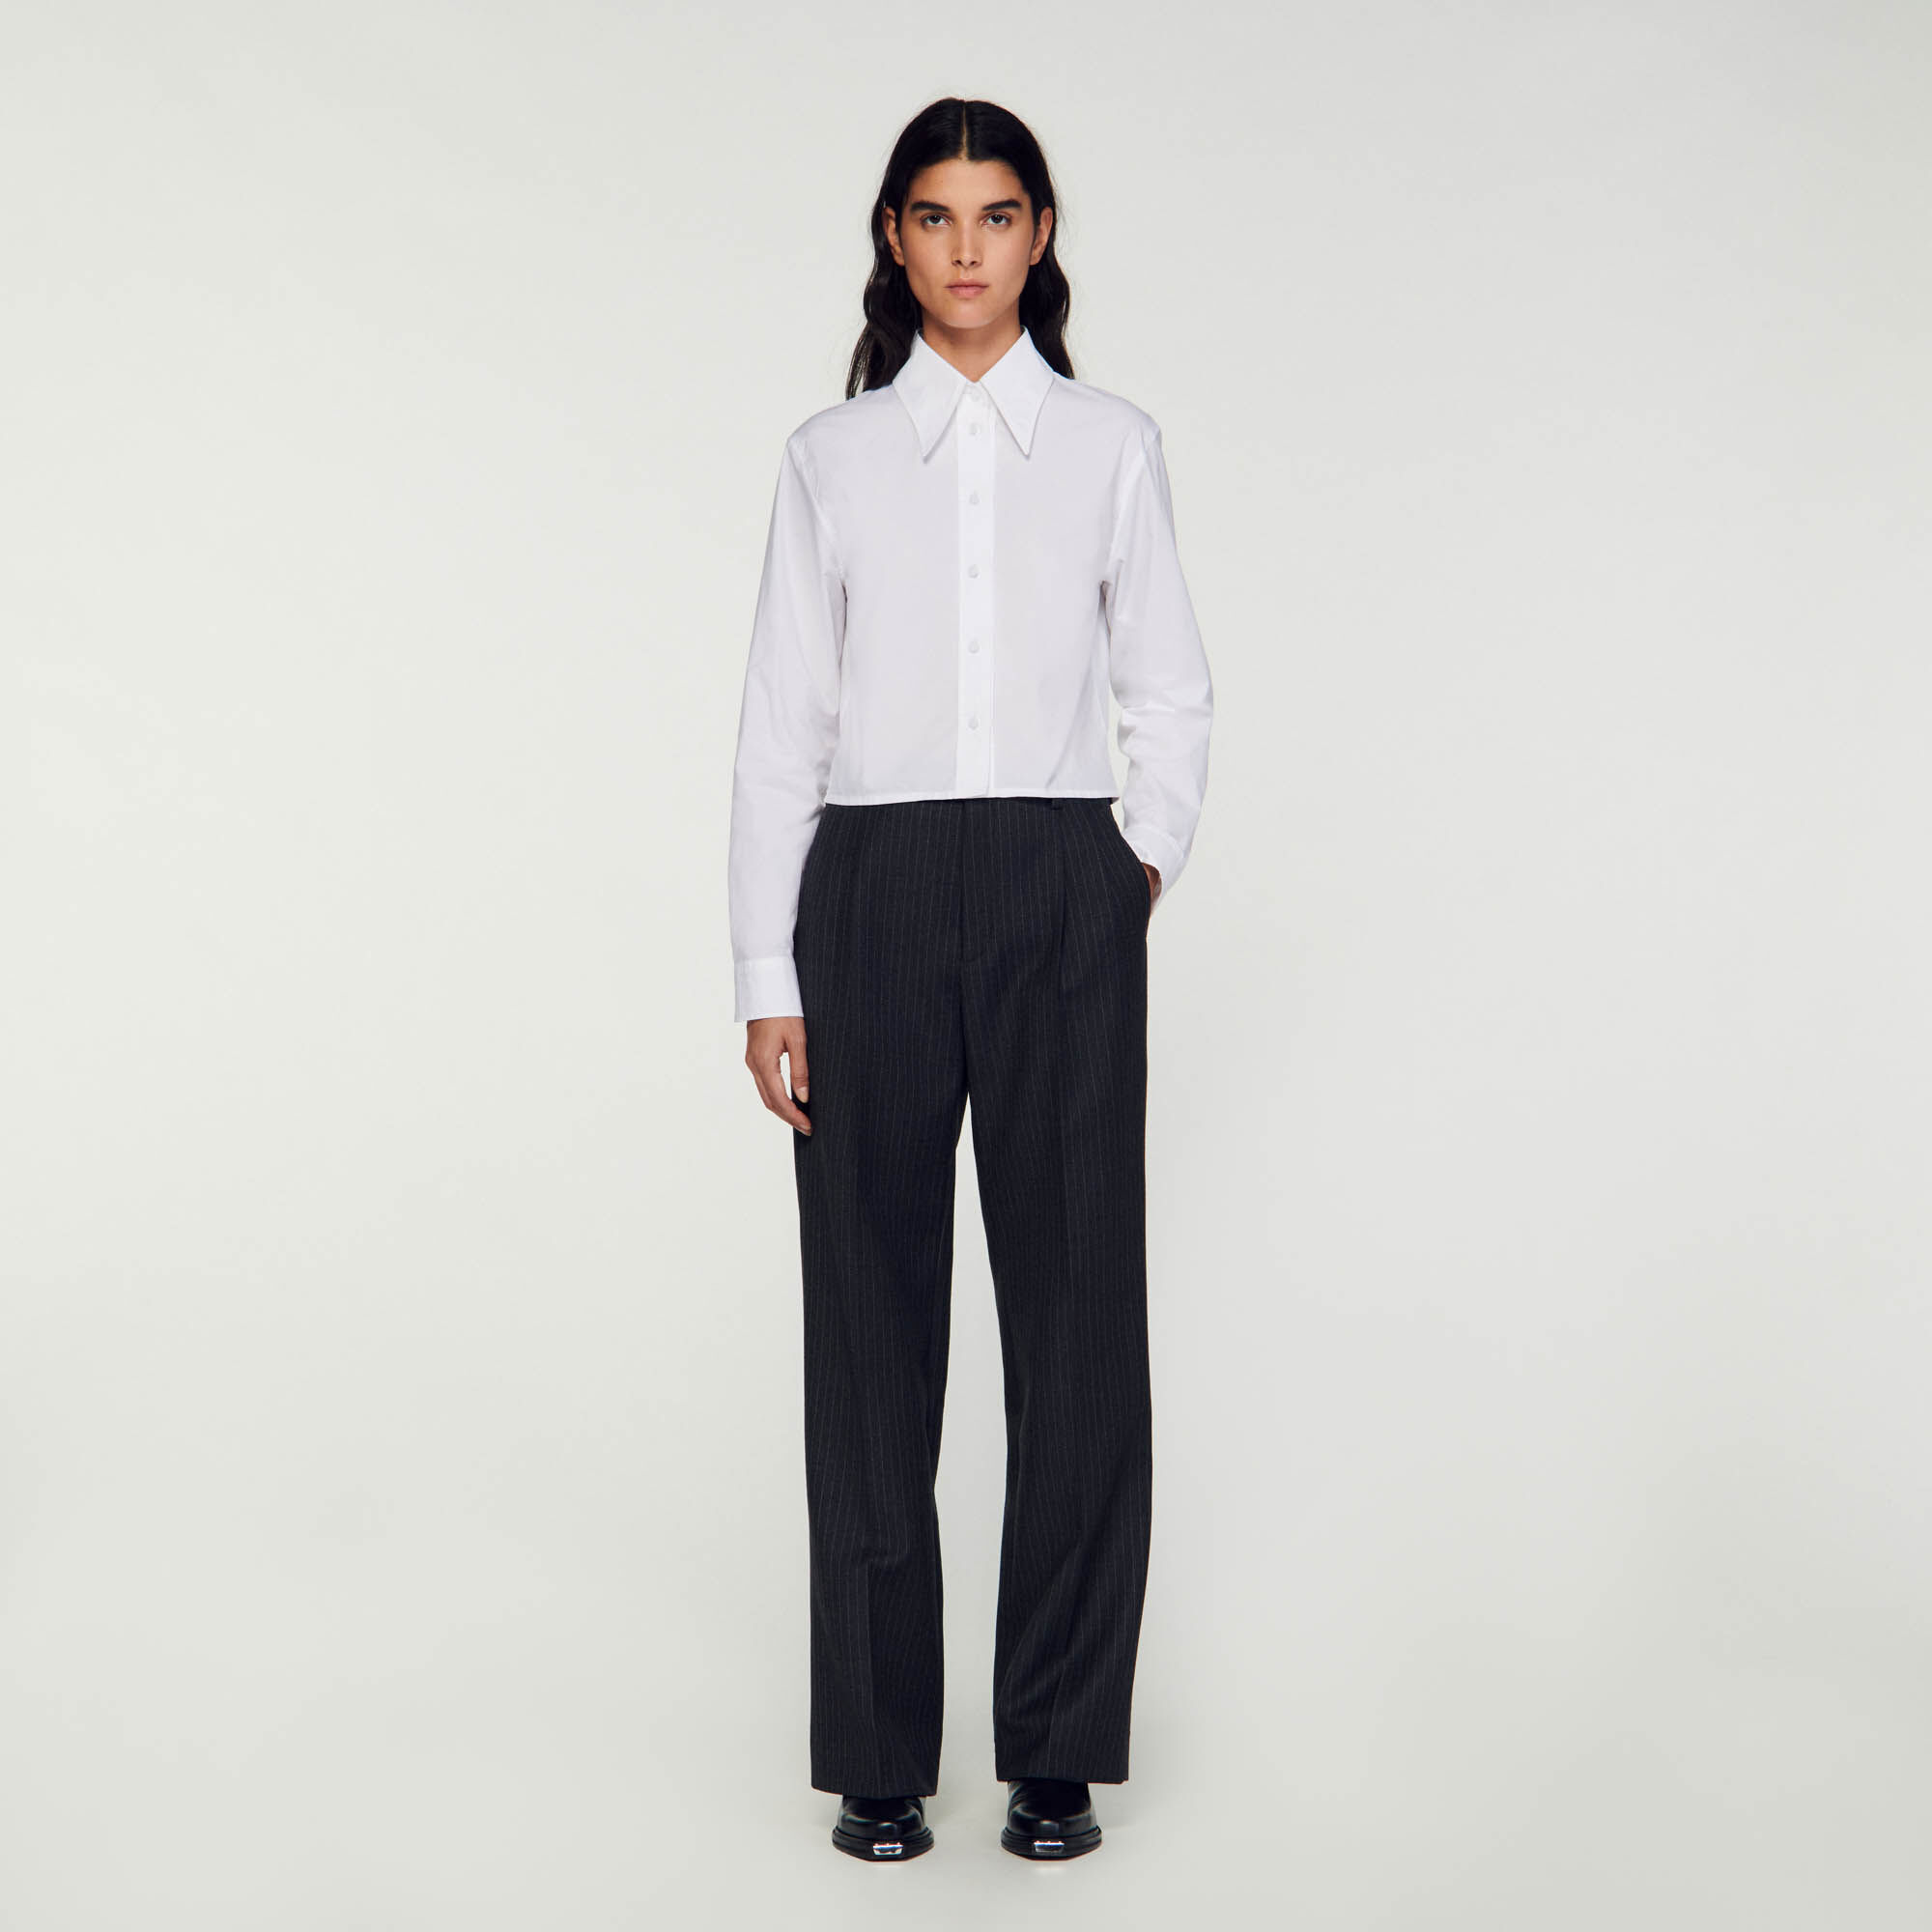 Womenswear trousers: short, wideleg or high waist | Promod